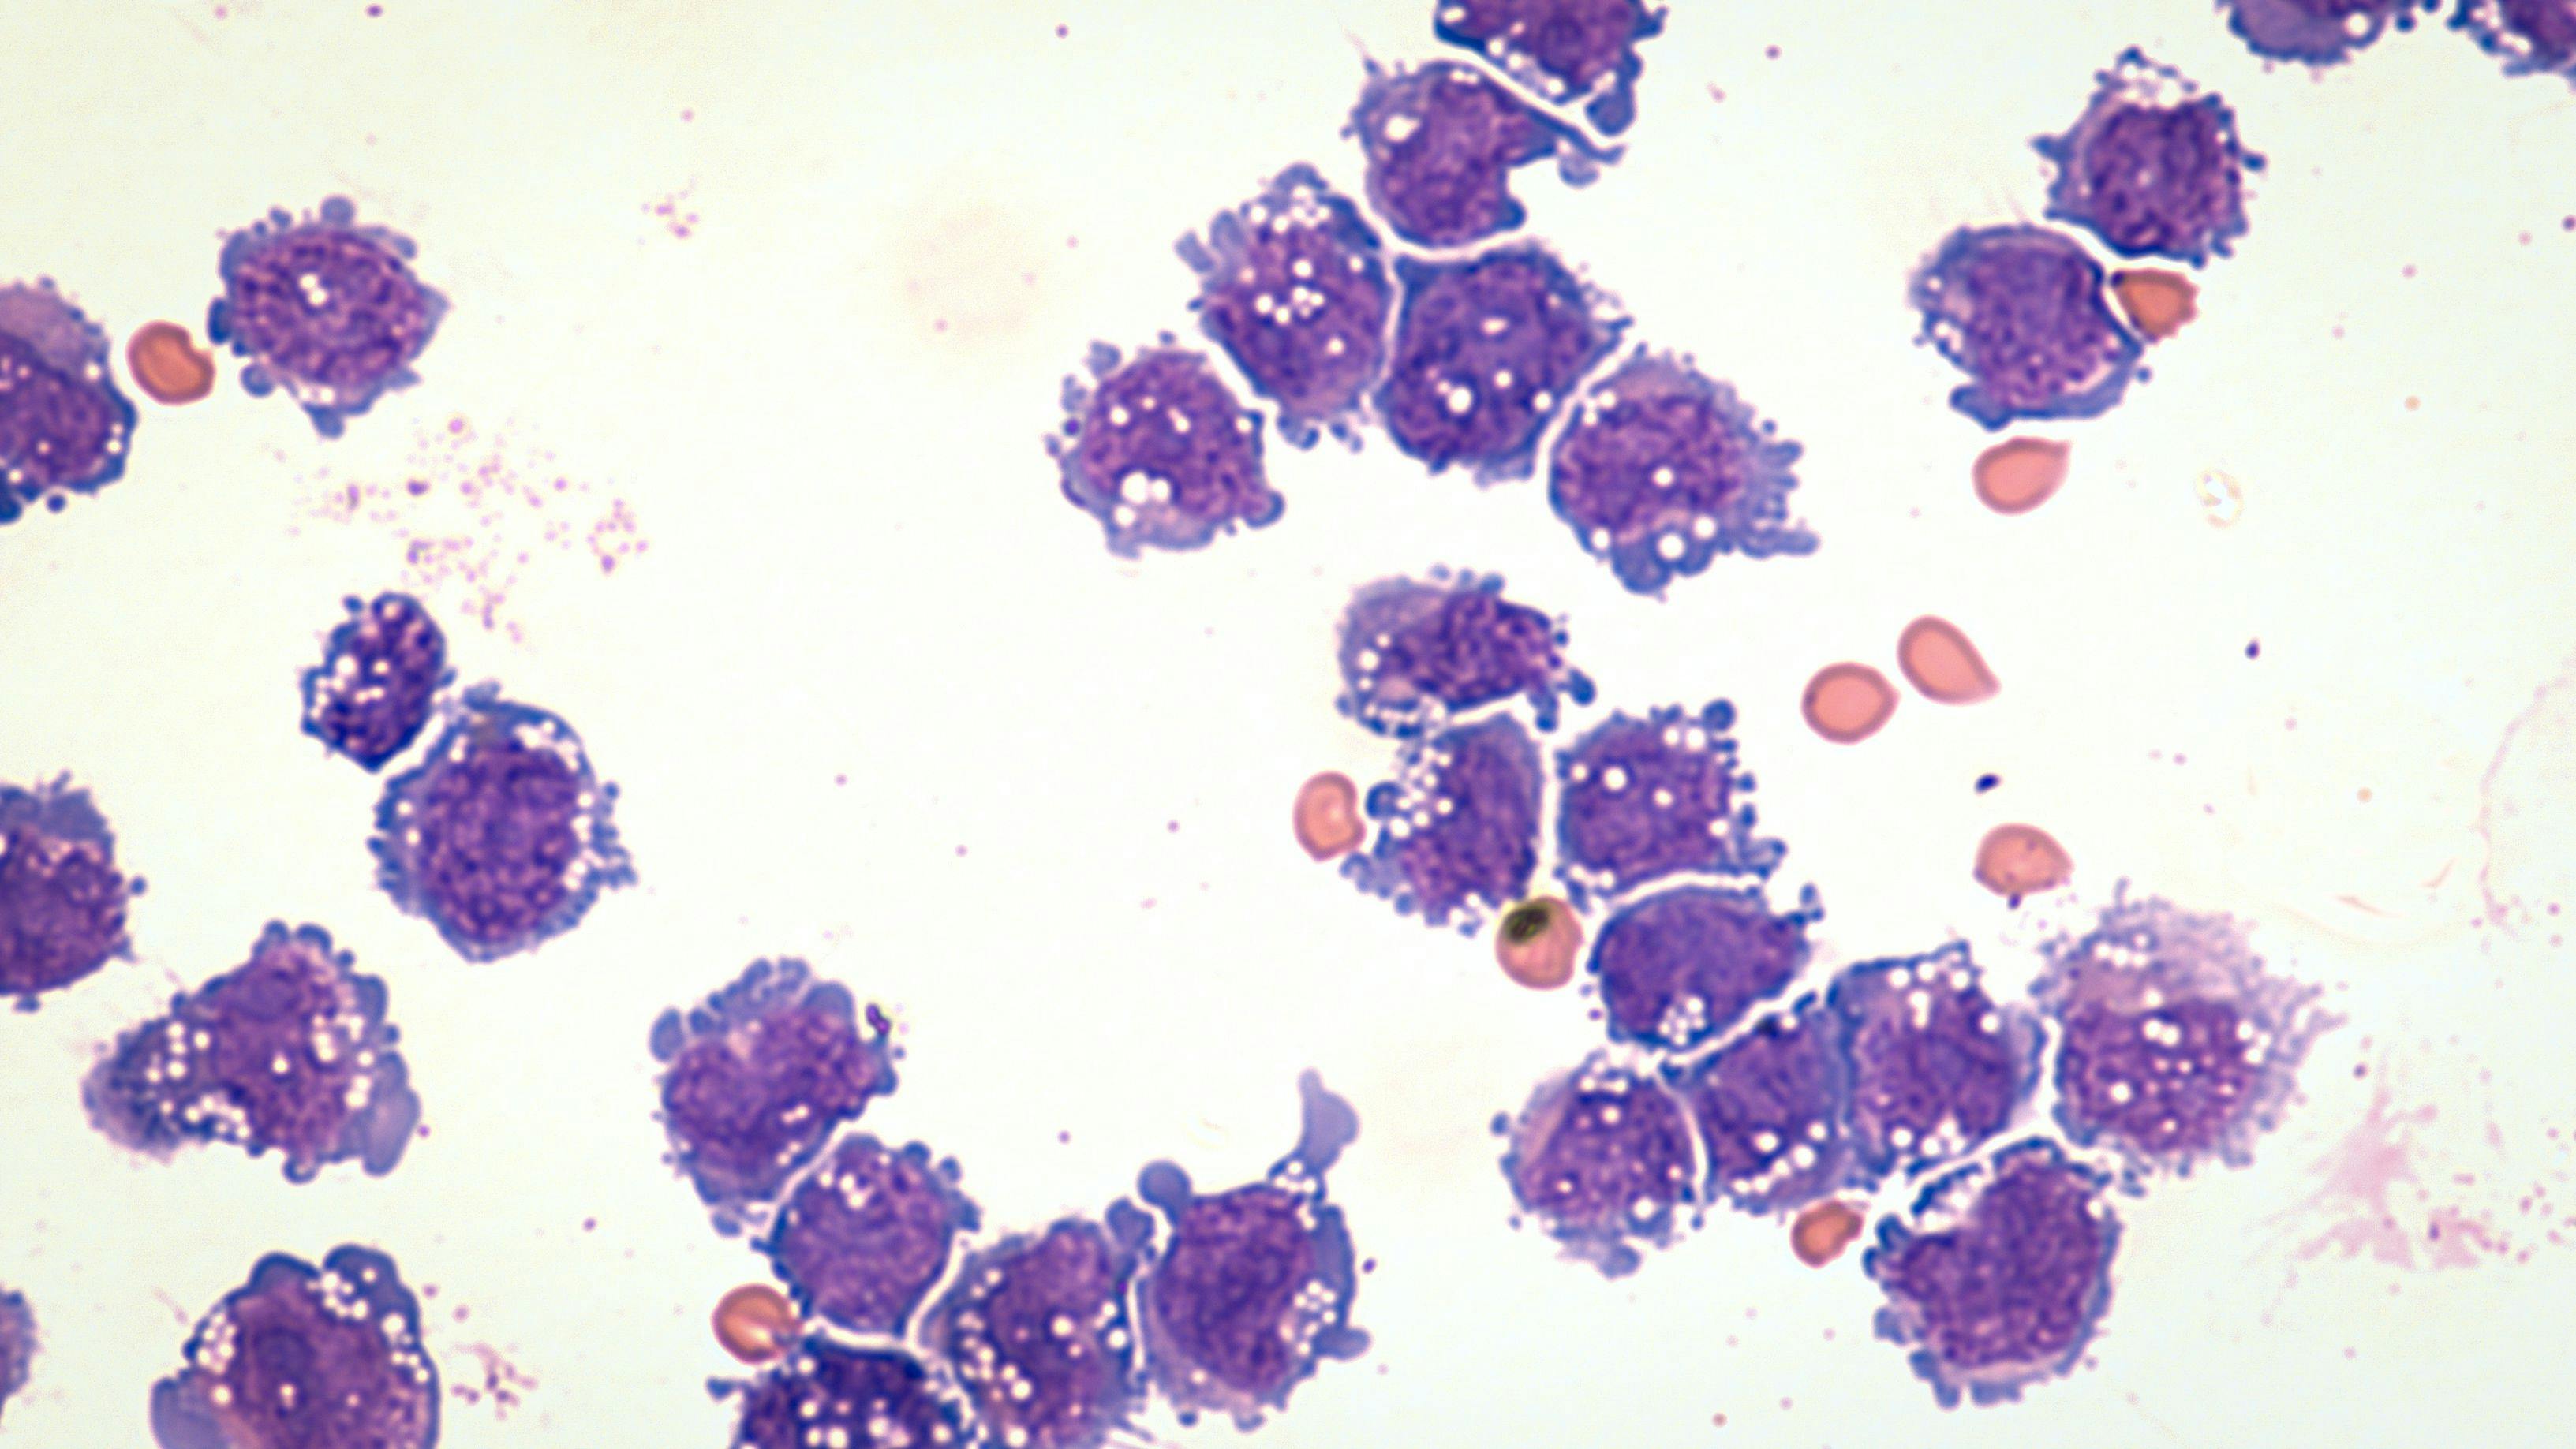 Malignant effusion cytology microscopic image of diffuse large B-cell lymphoma a type of non Hodgkin lymphoma | Image credit: David A Litman - stock.adobe.com